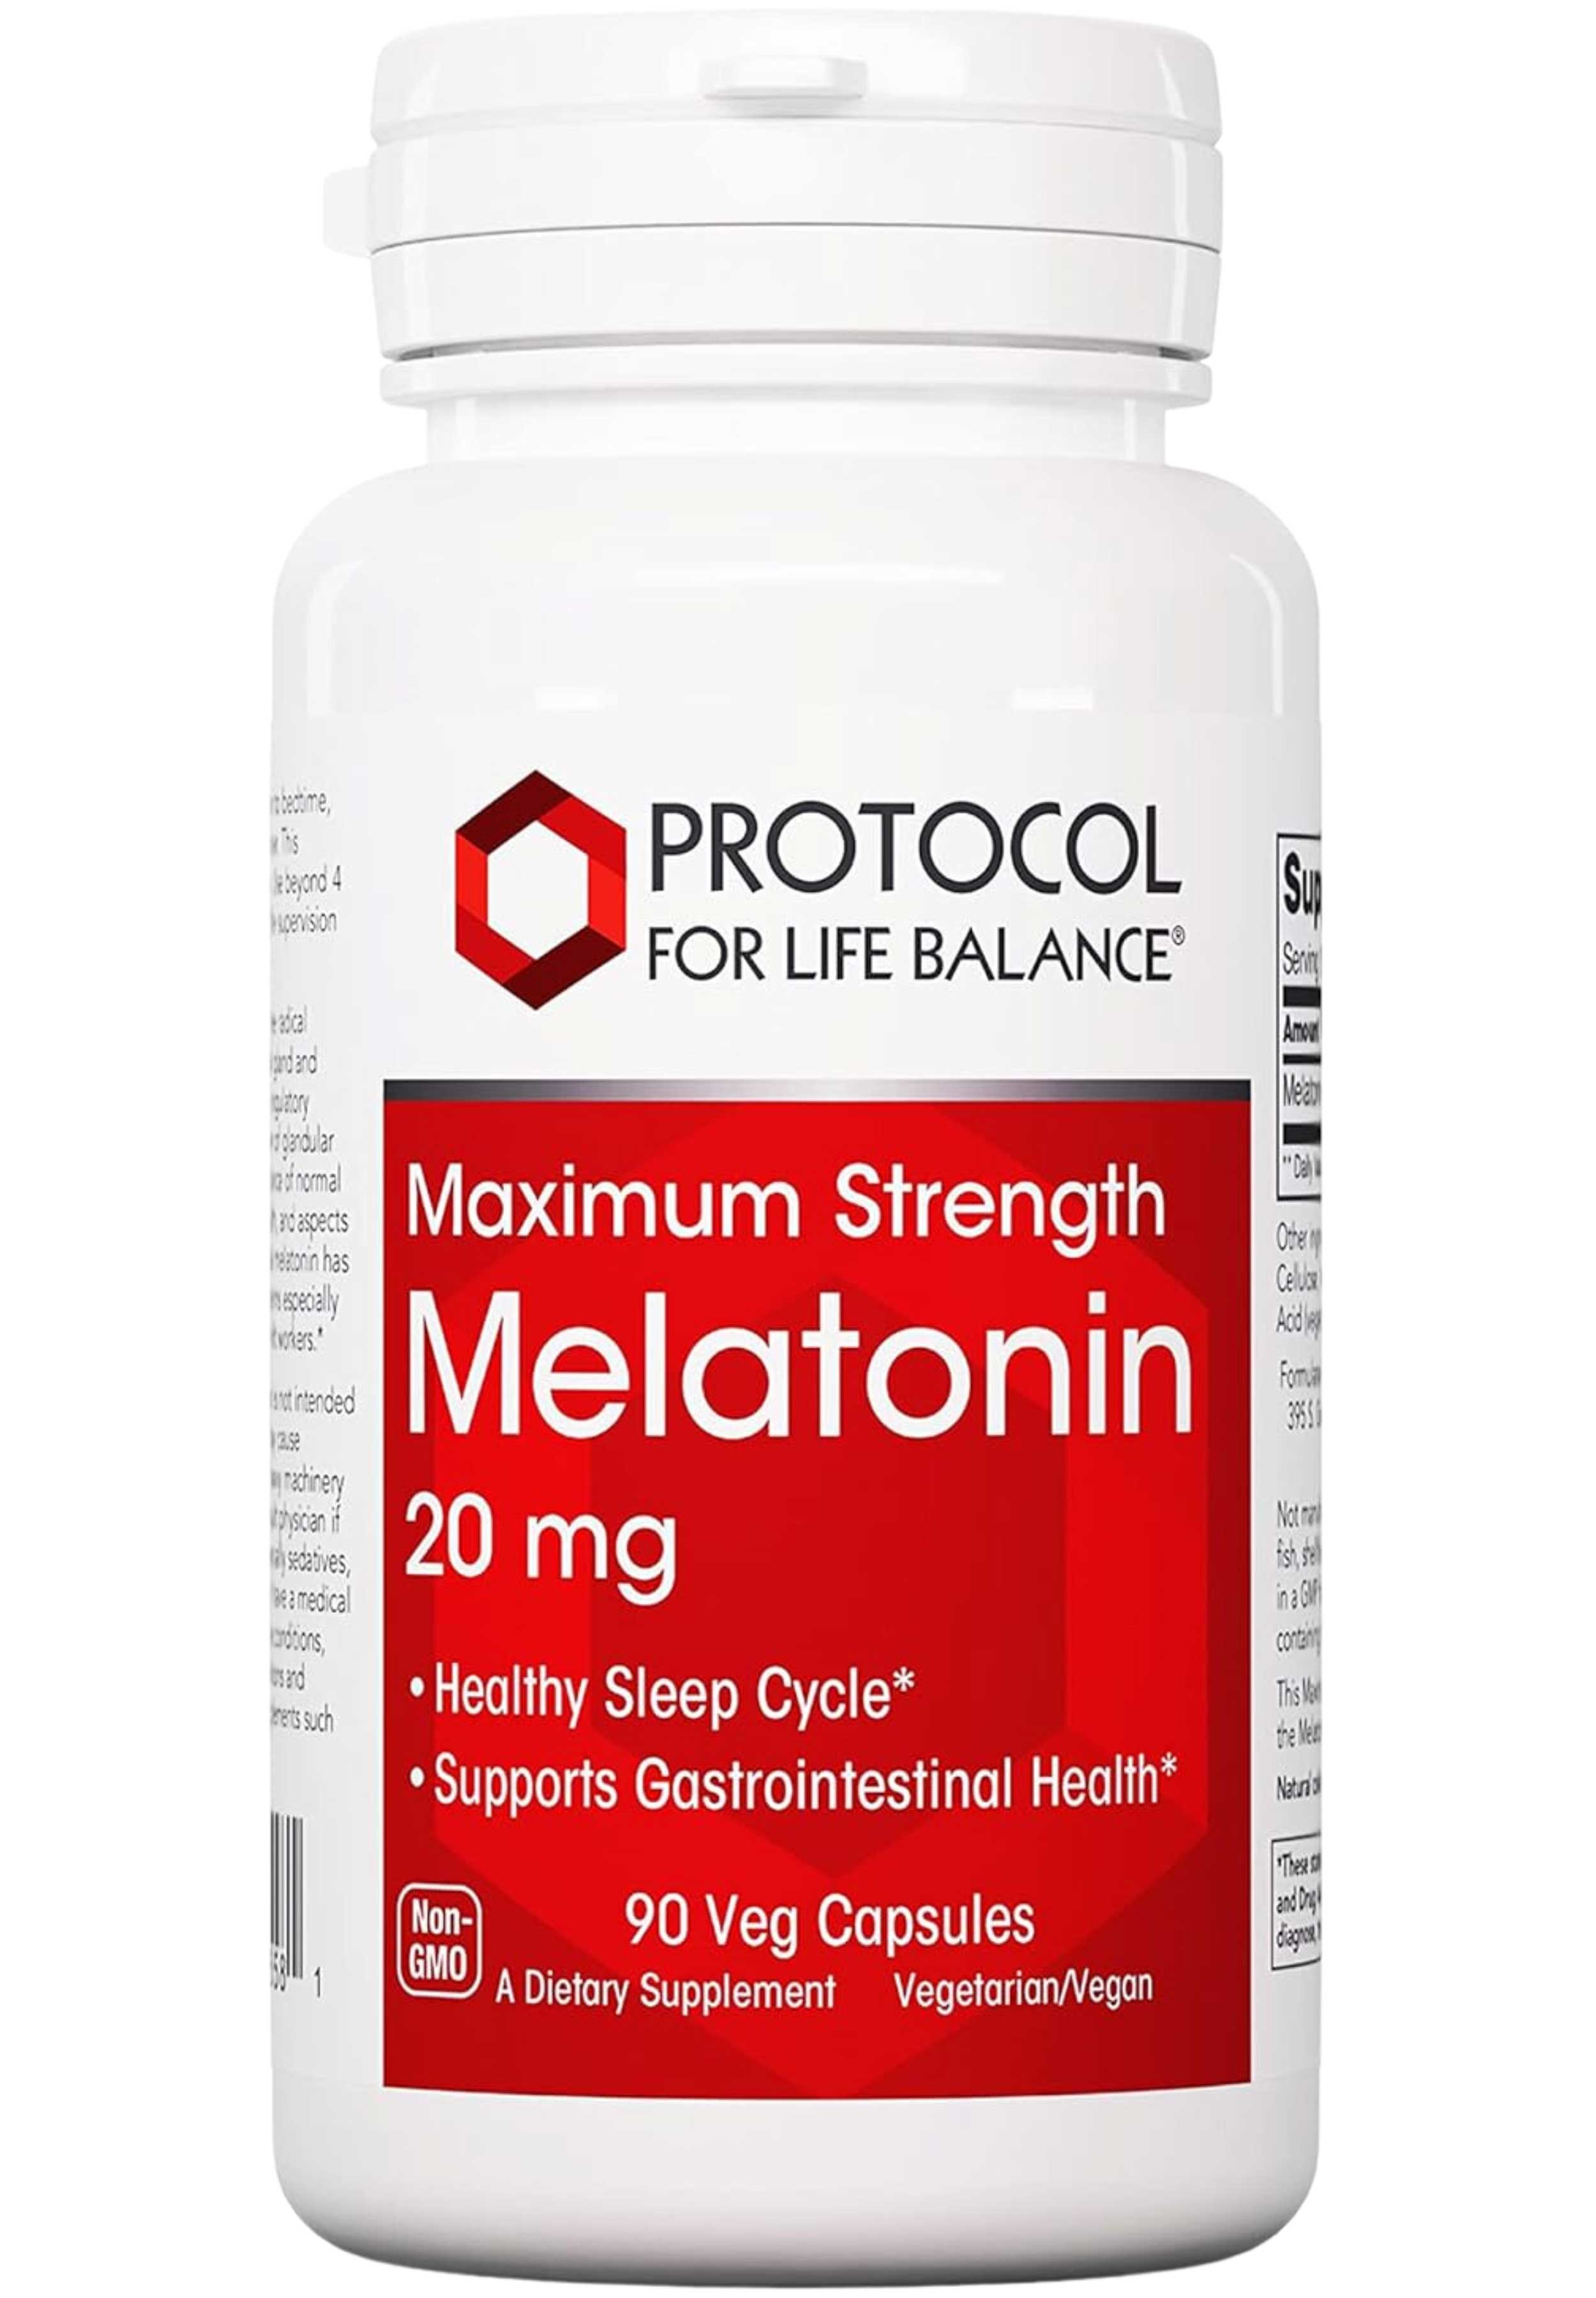 Protocol for Life Balance Melatonin 20 mg Maximum Strength